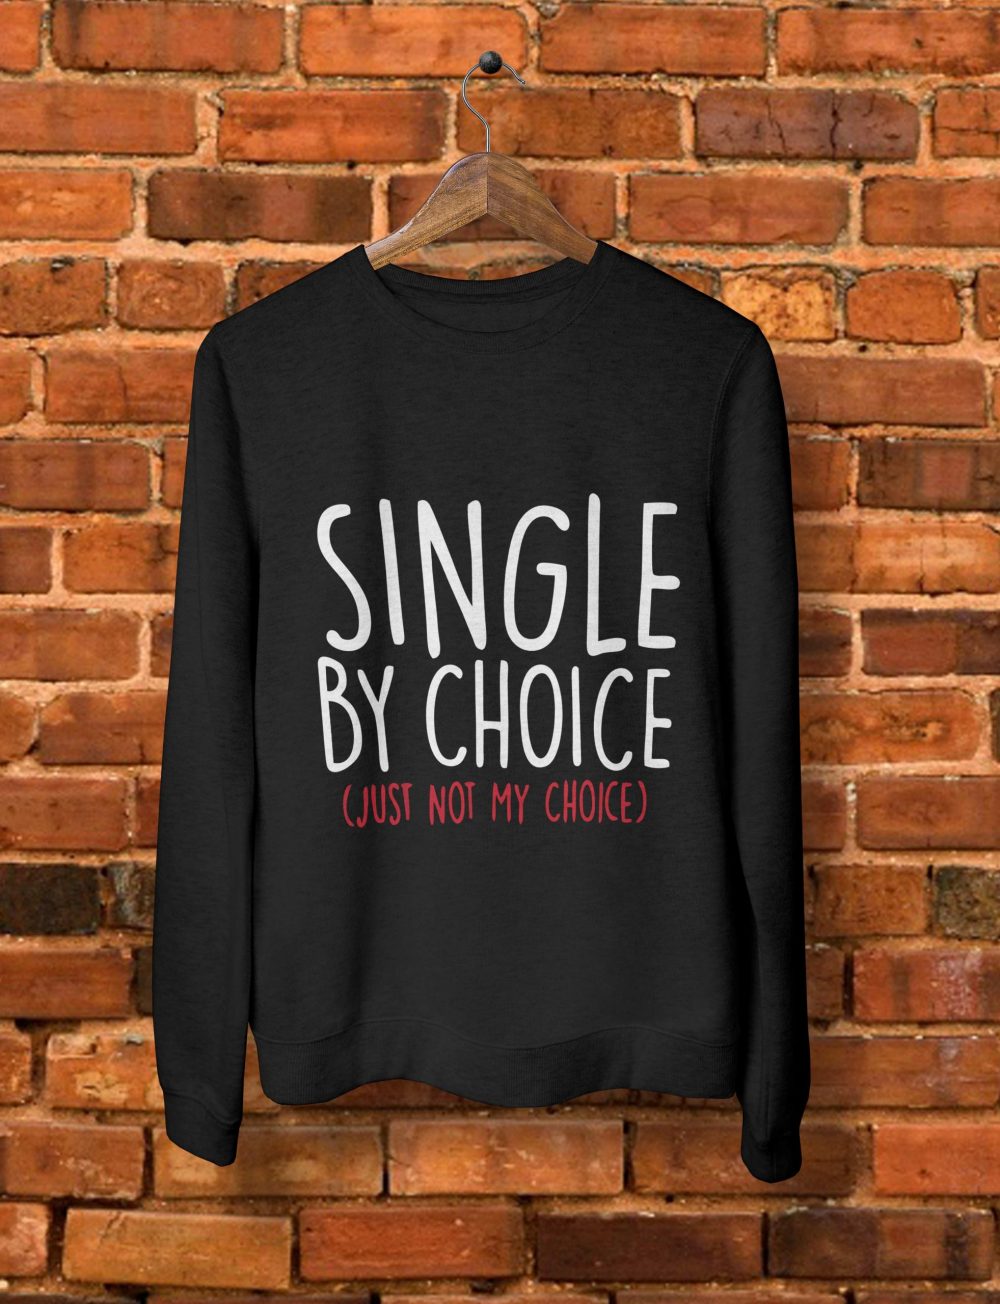 Single By Choice Sweatshirt by Teez Mar Khan - Pickshop.pk